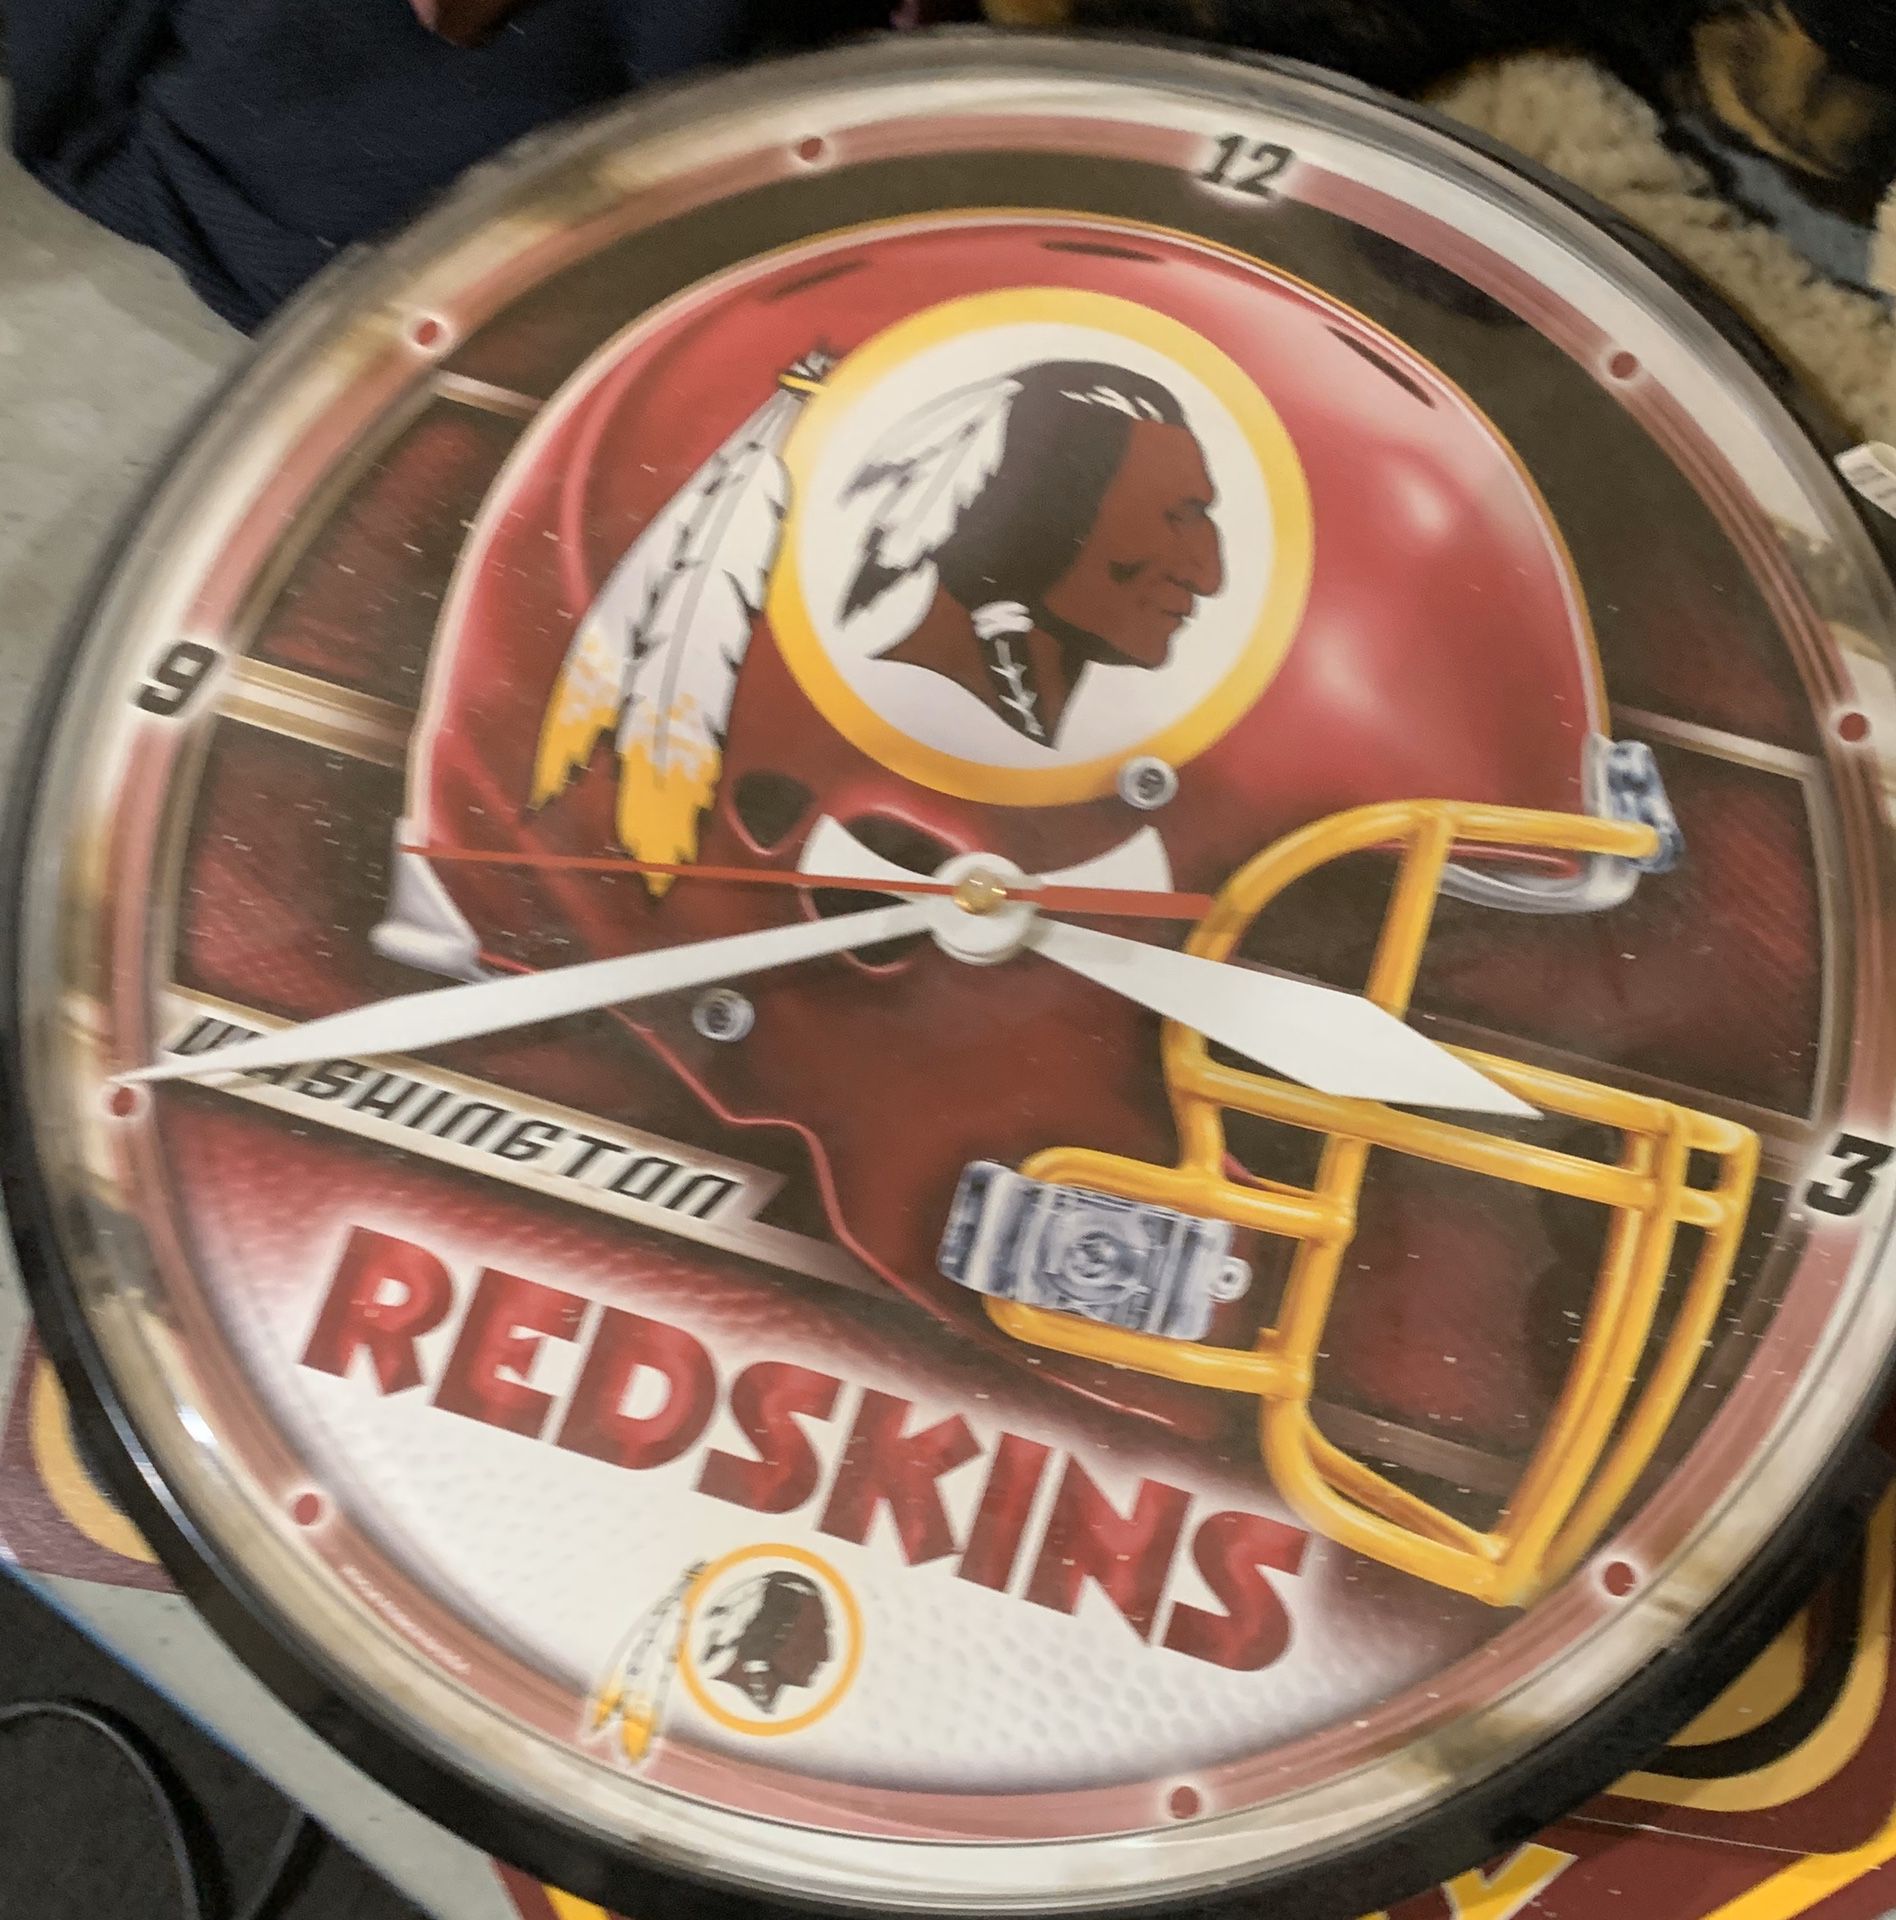 Redskins clock